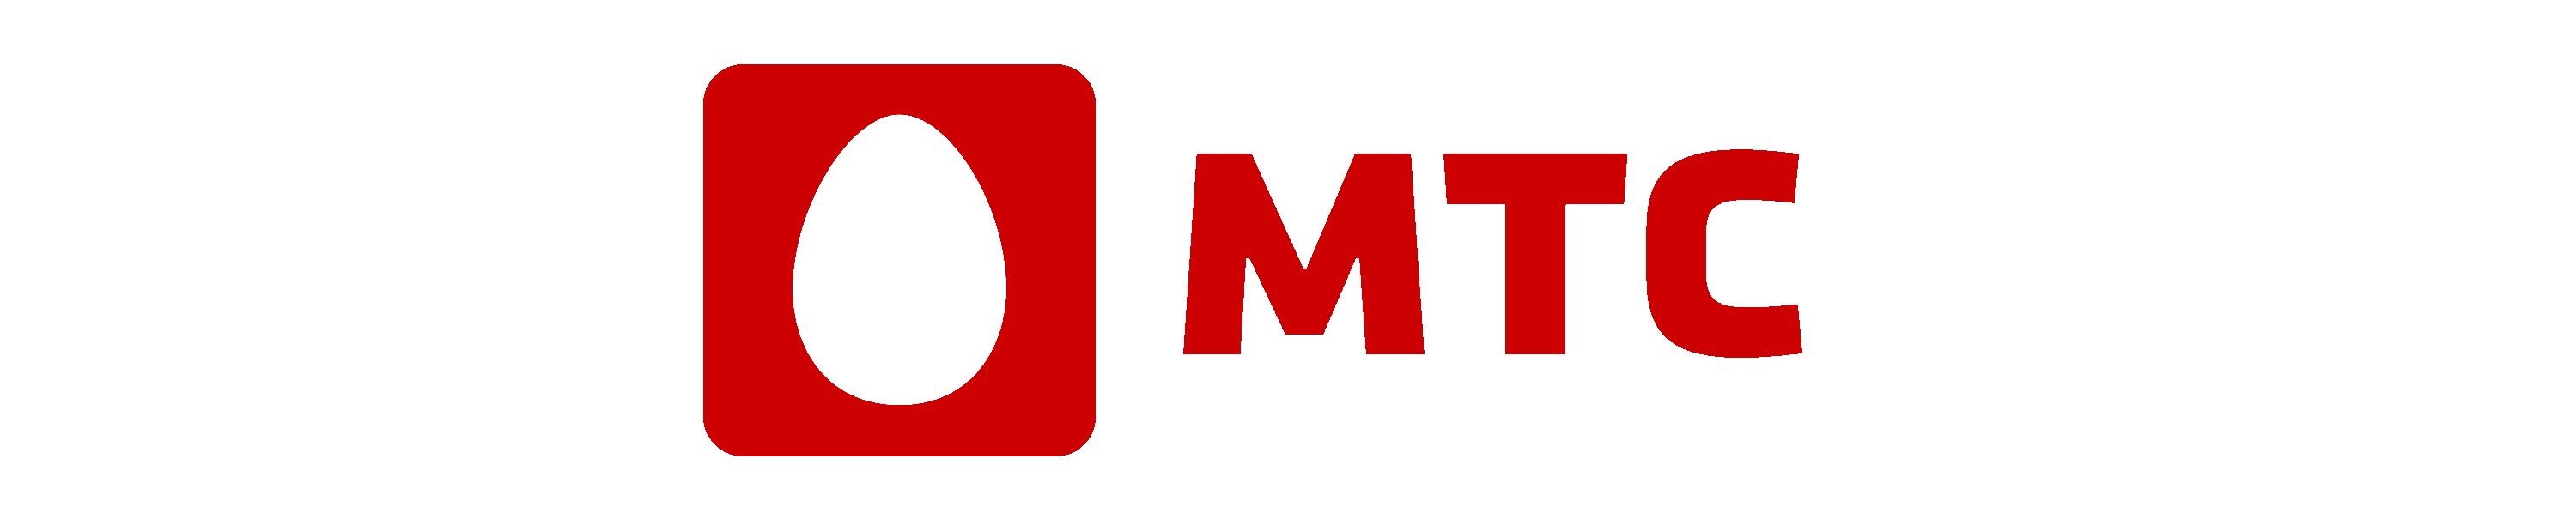 МТС логотип. Эмблема МТС ТВ. МТС банк значок. Новый логотип МТС. Мтс лейбл